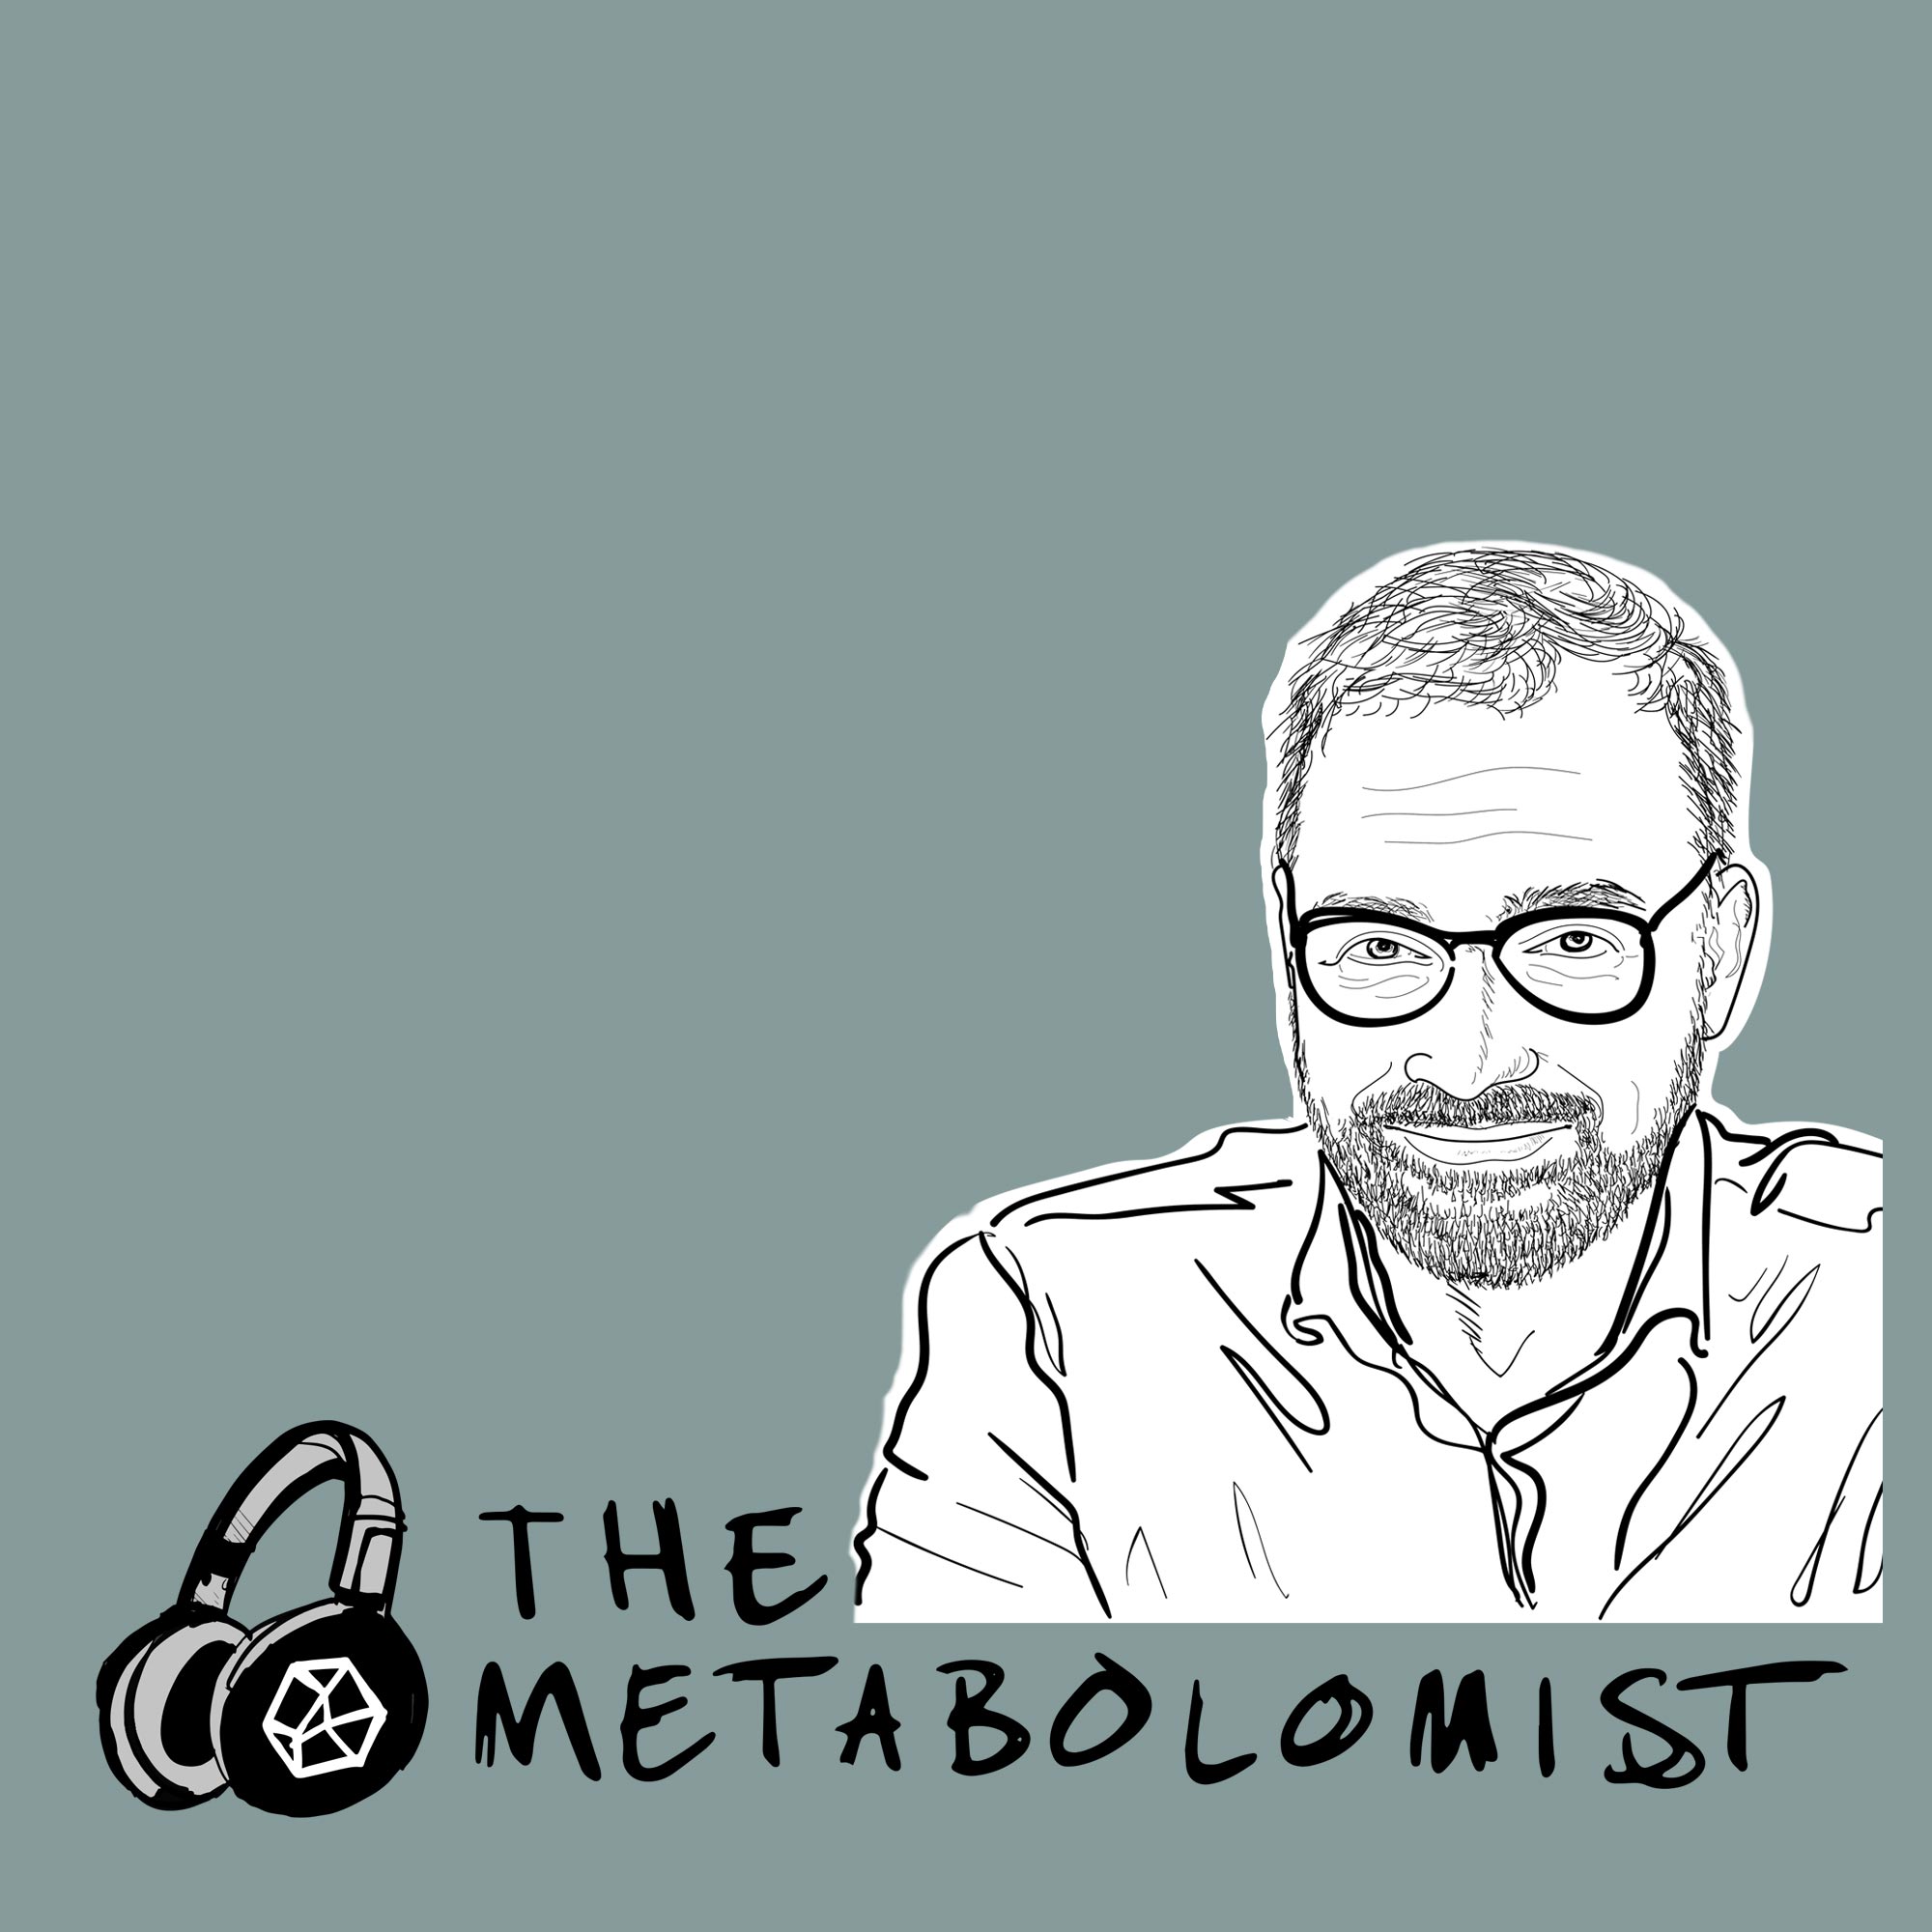 The Metabolomist - Robert Ahrends